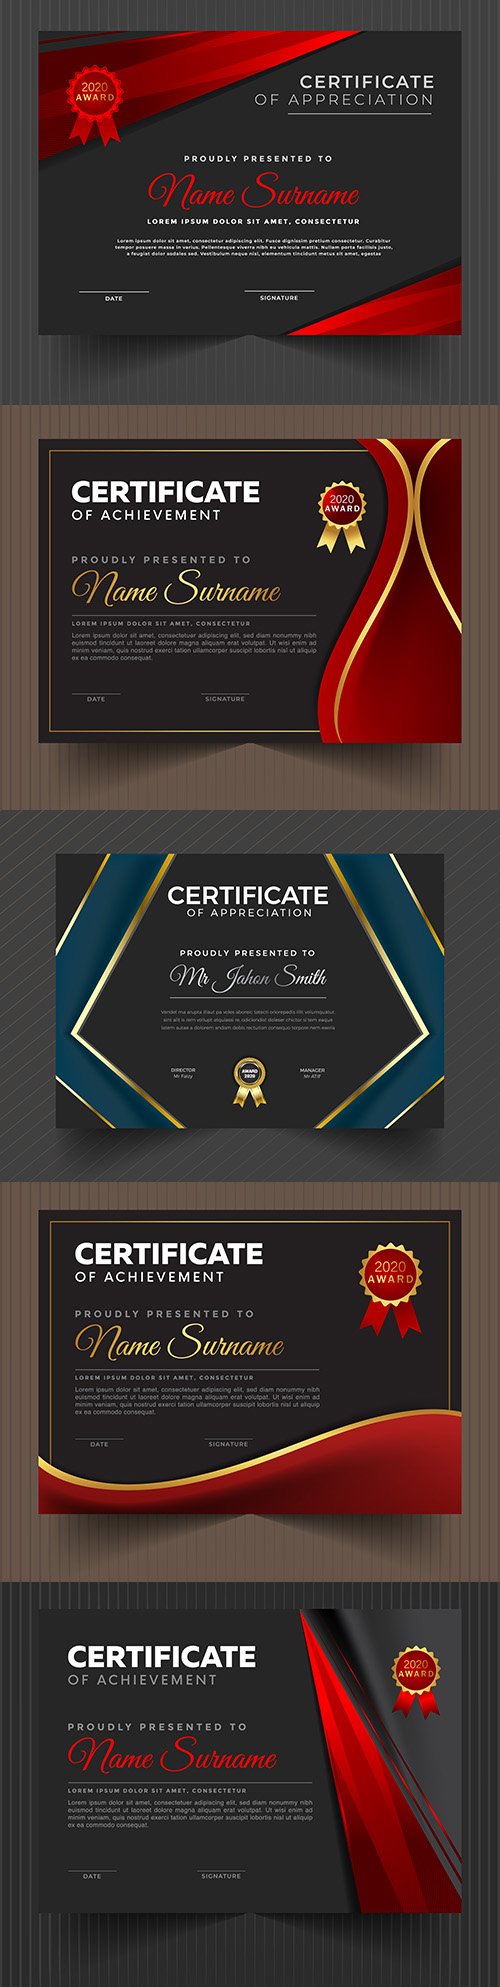 Certificate achievement template design collection 3